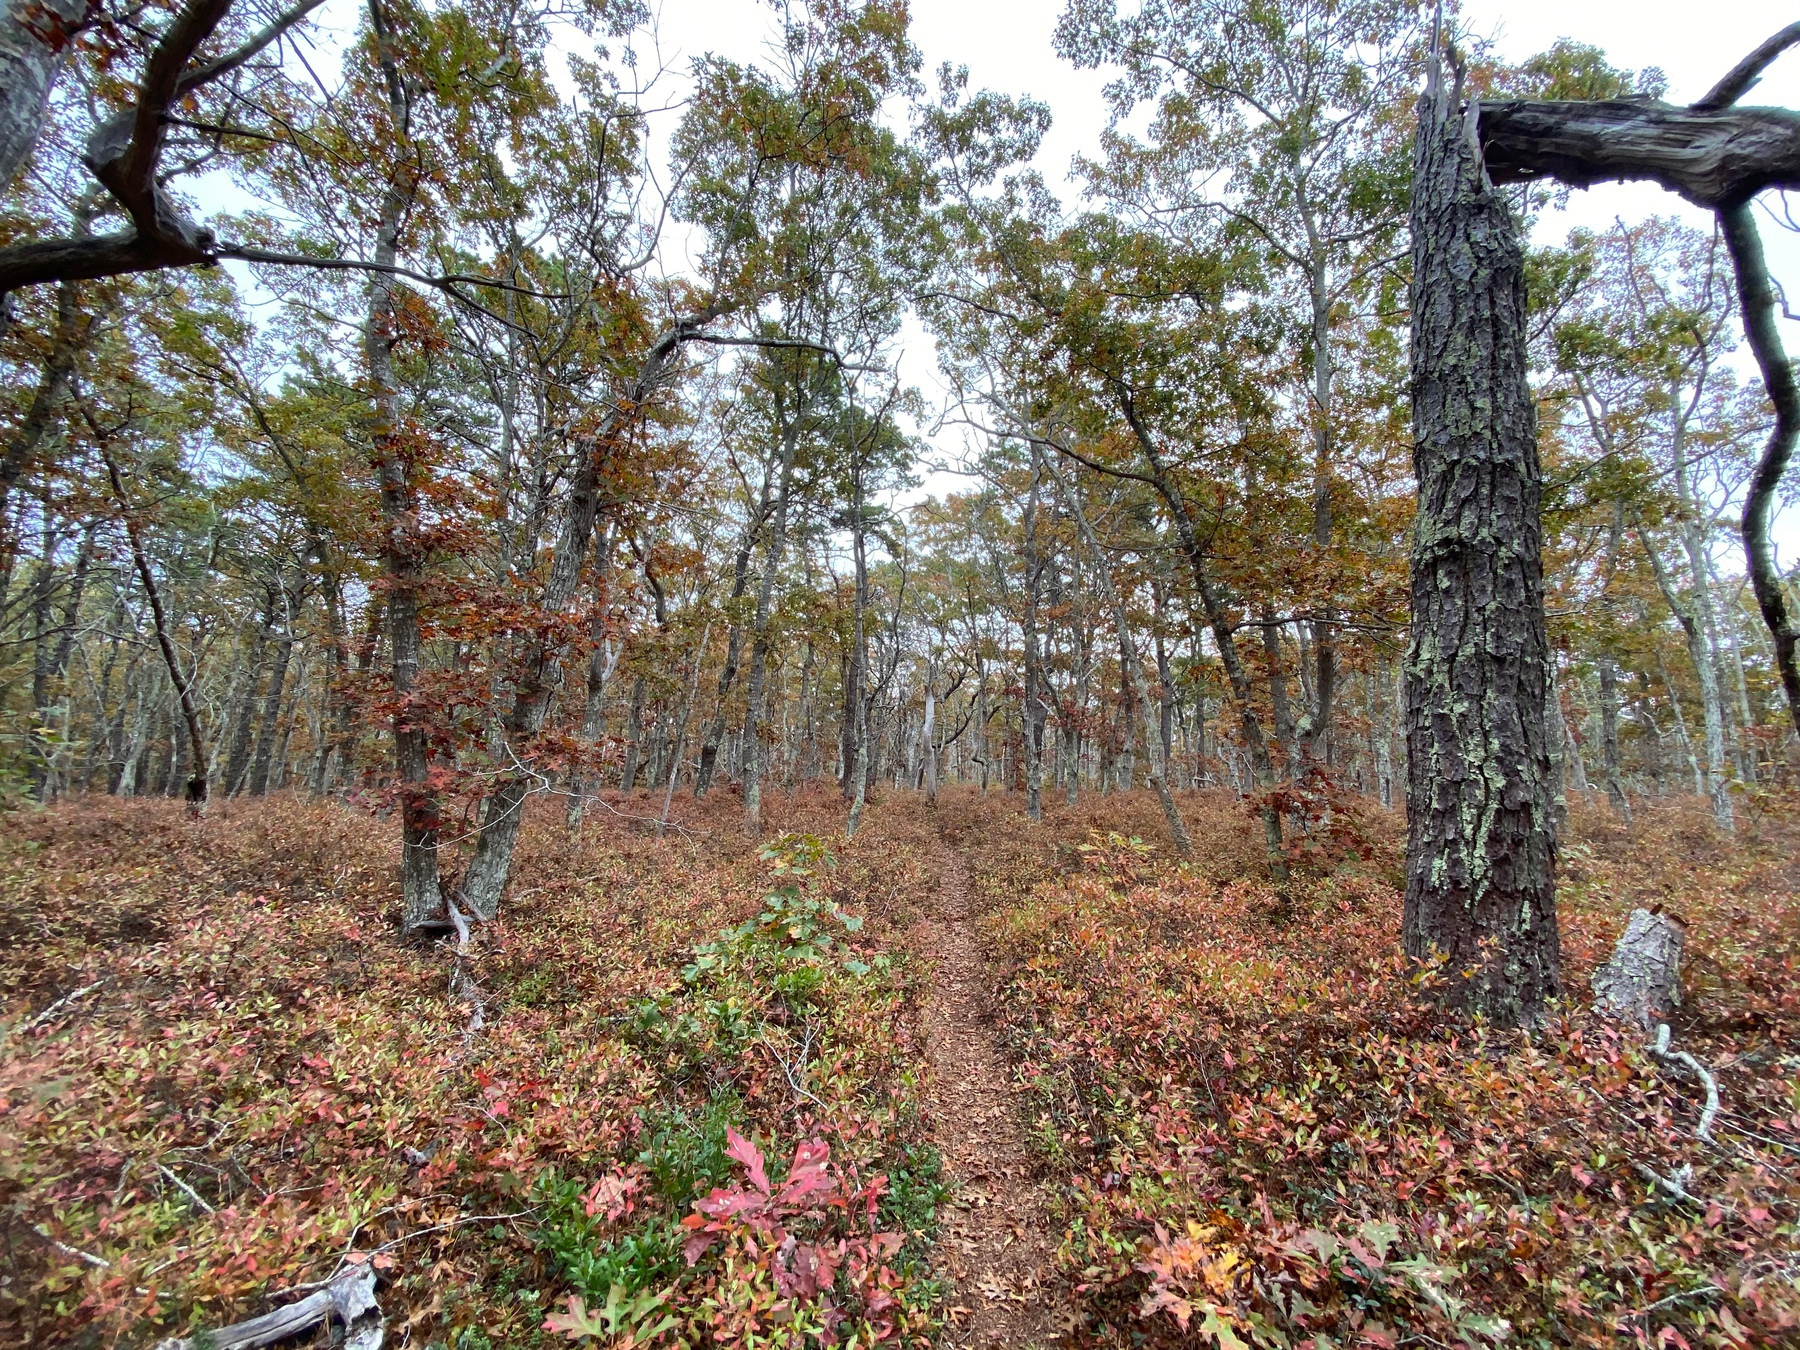 View of a narrow trail through an autumn forest.